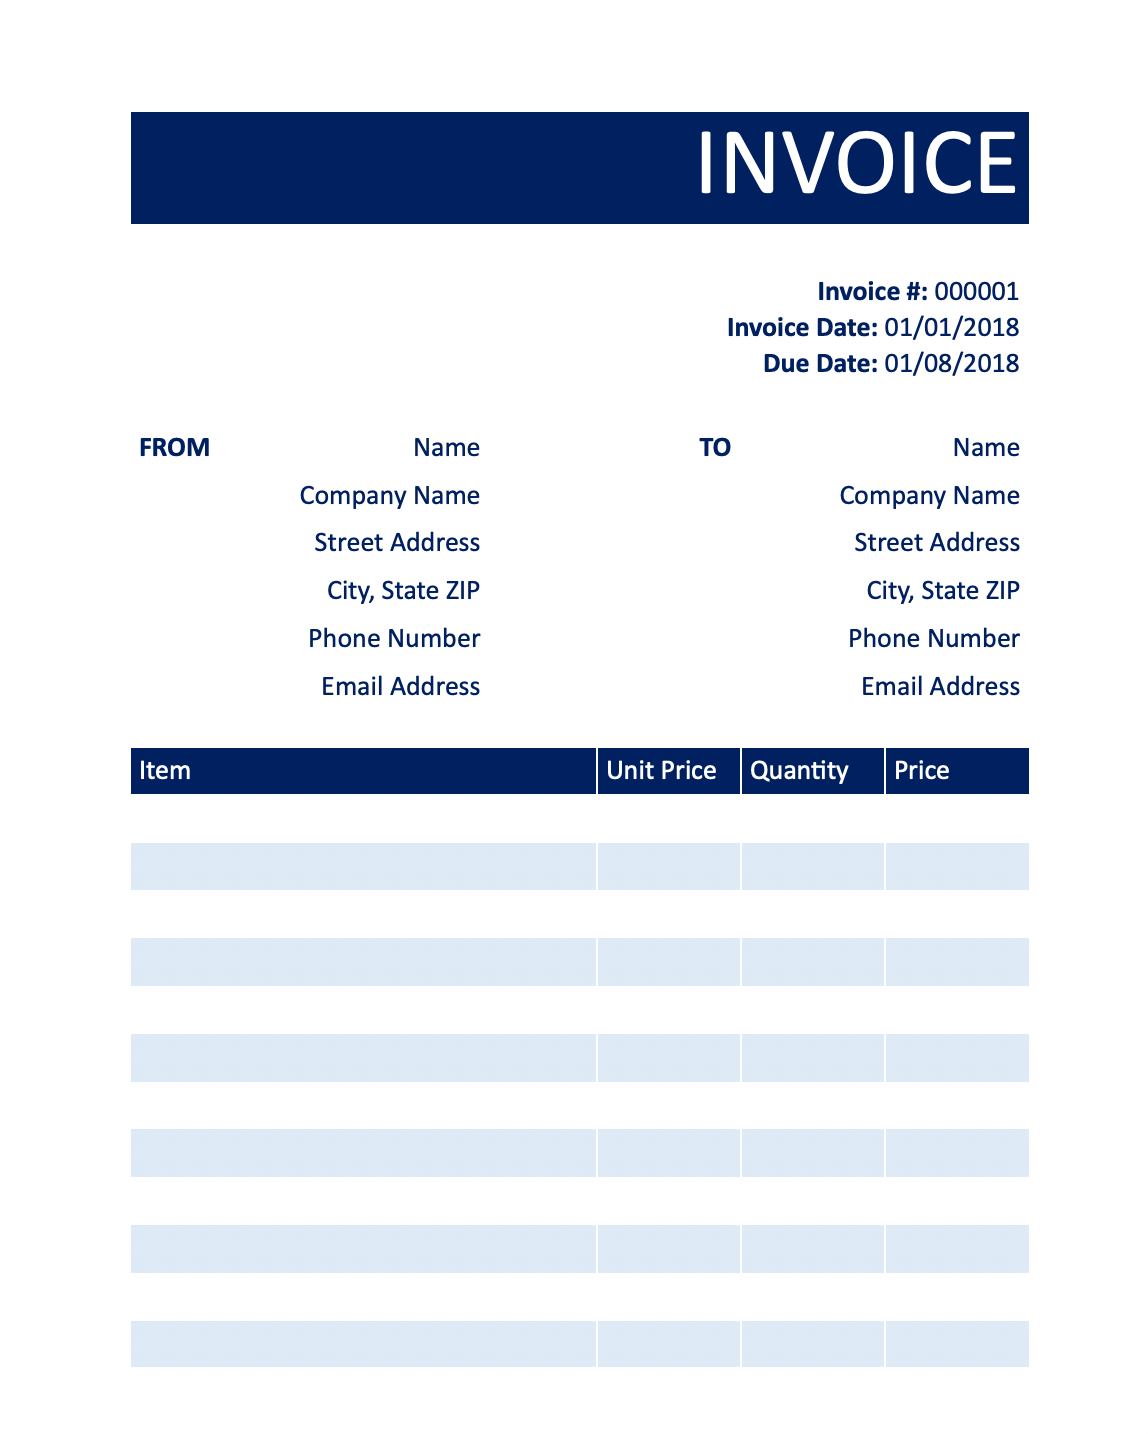 invoice template fillable pdf